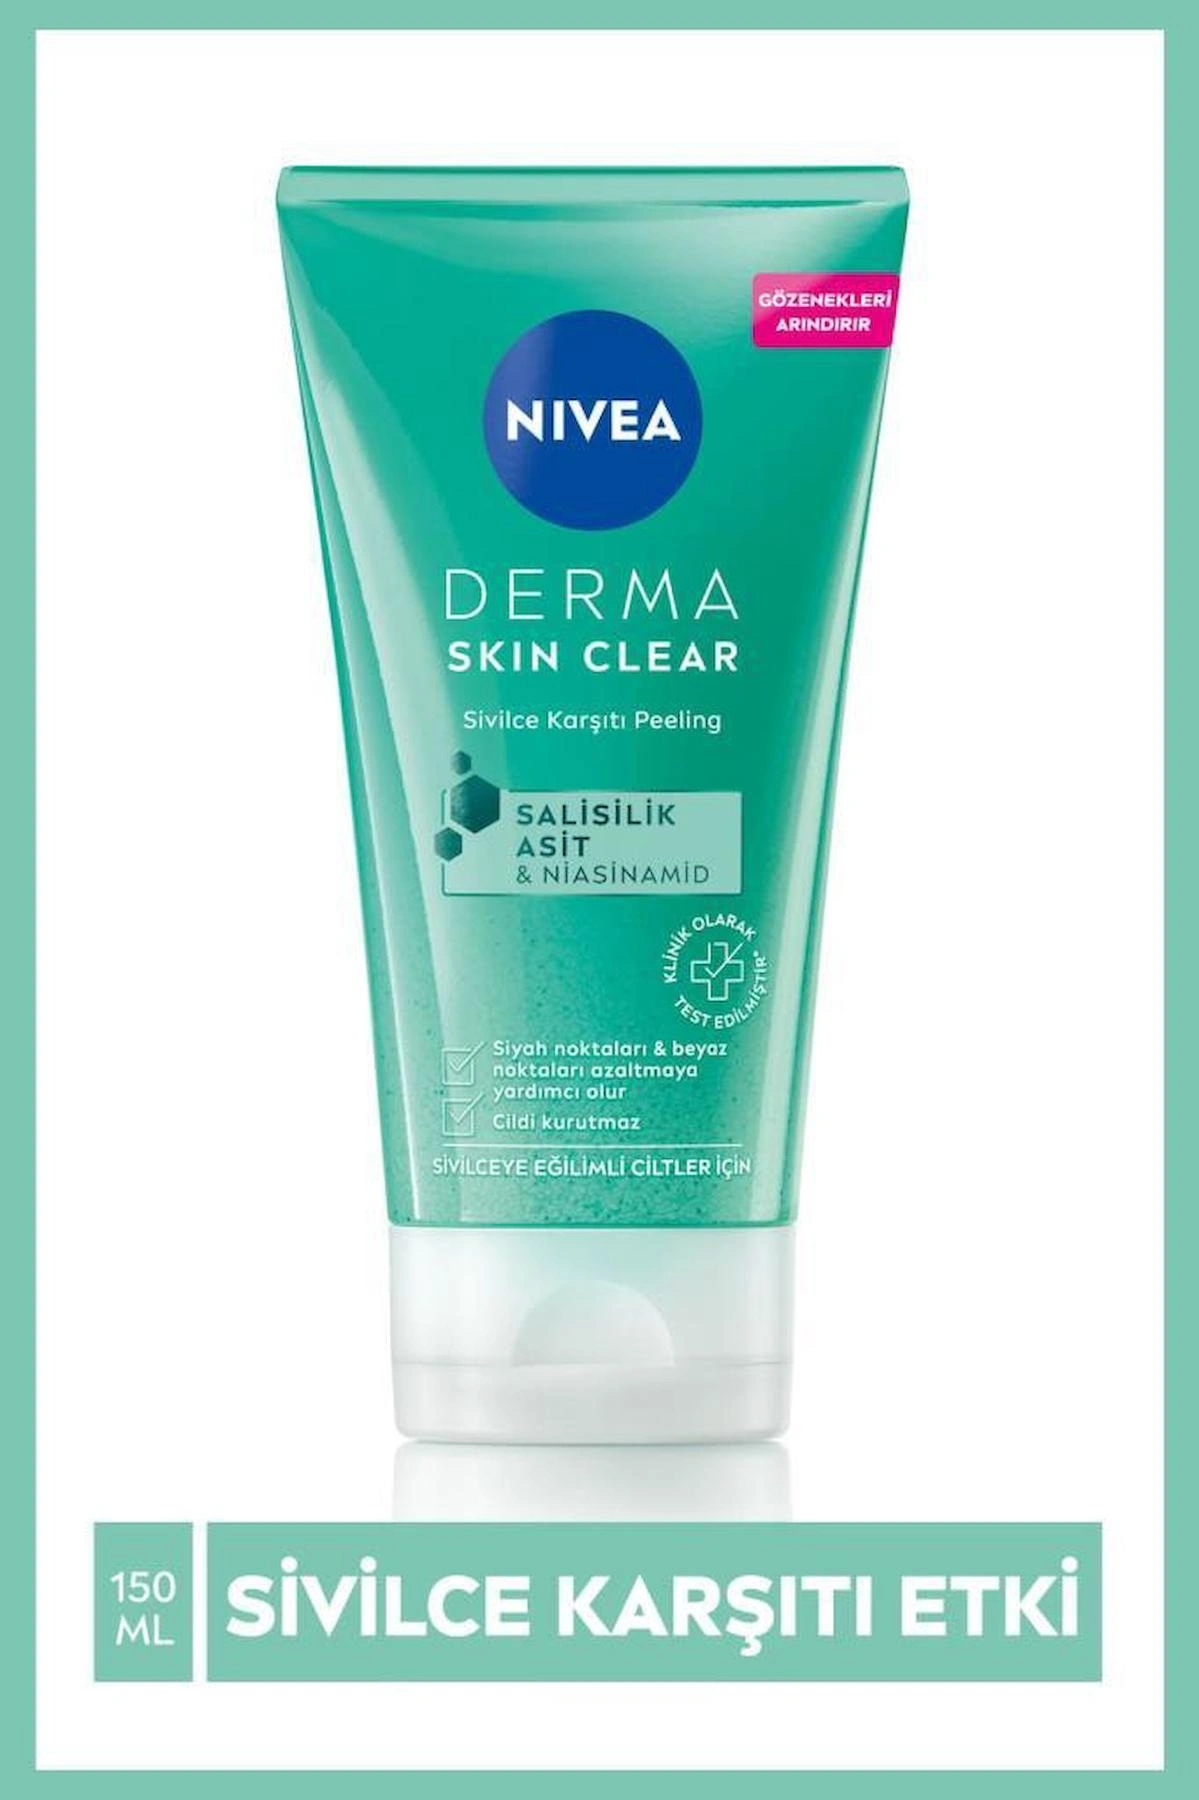 Nivea - Nivea Derma Skin Clear Sivilce Karşıtı Peeling 150 ml